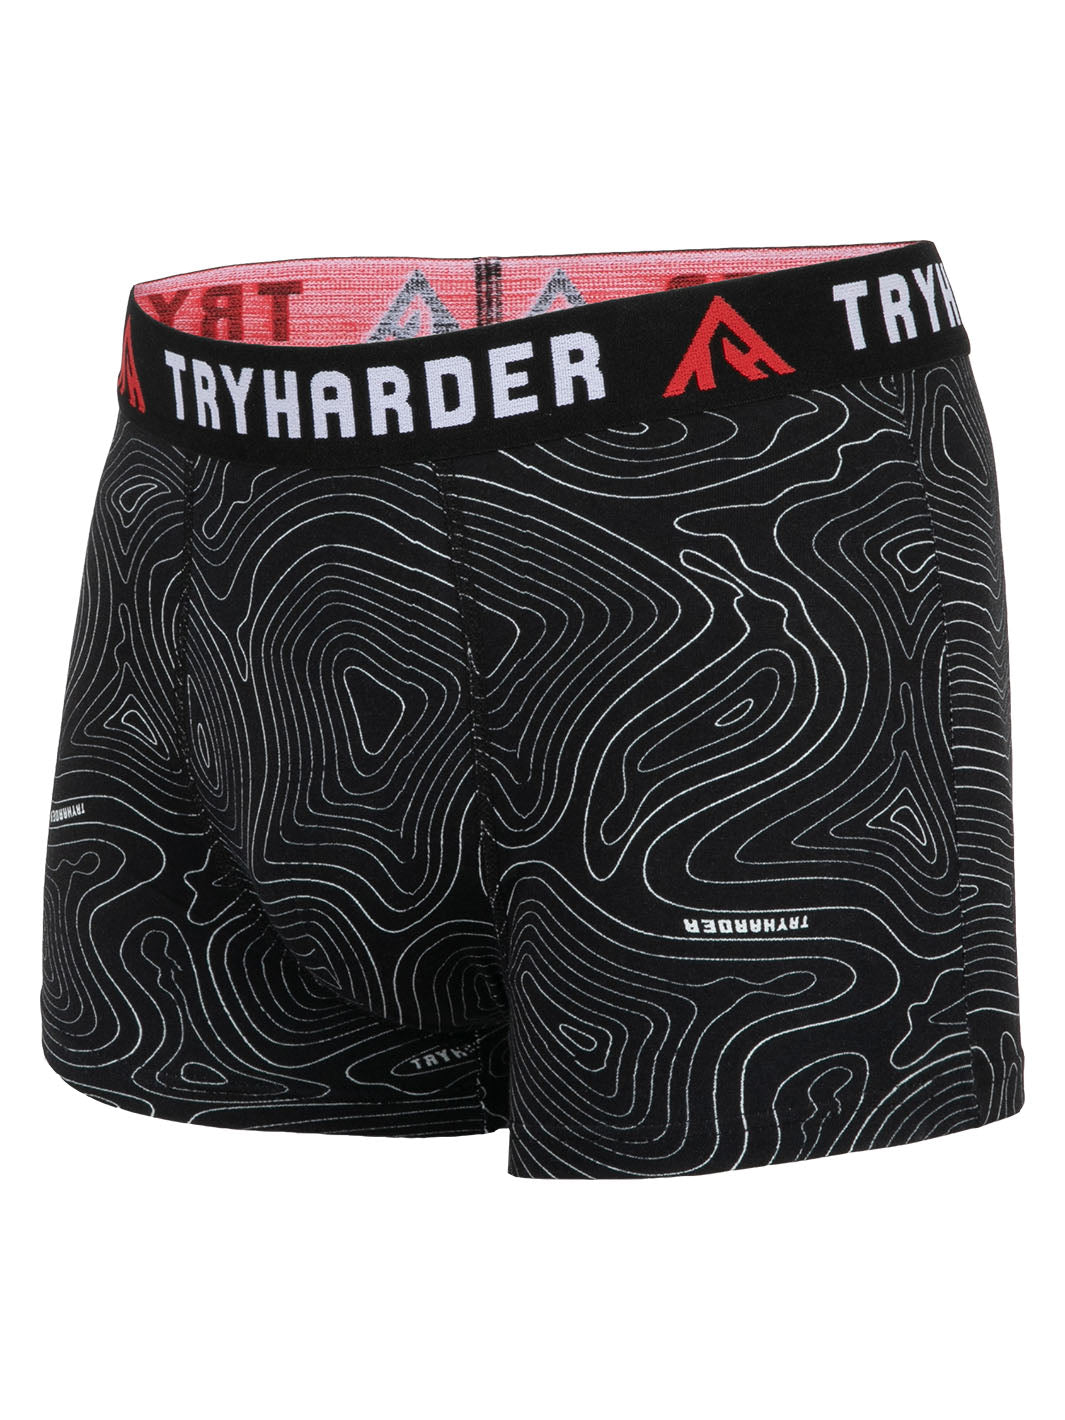 TRYHARDER - Boxer - Labyrinth Schwarz 1 Pack